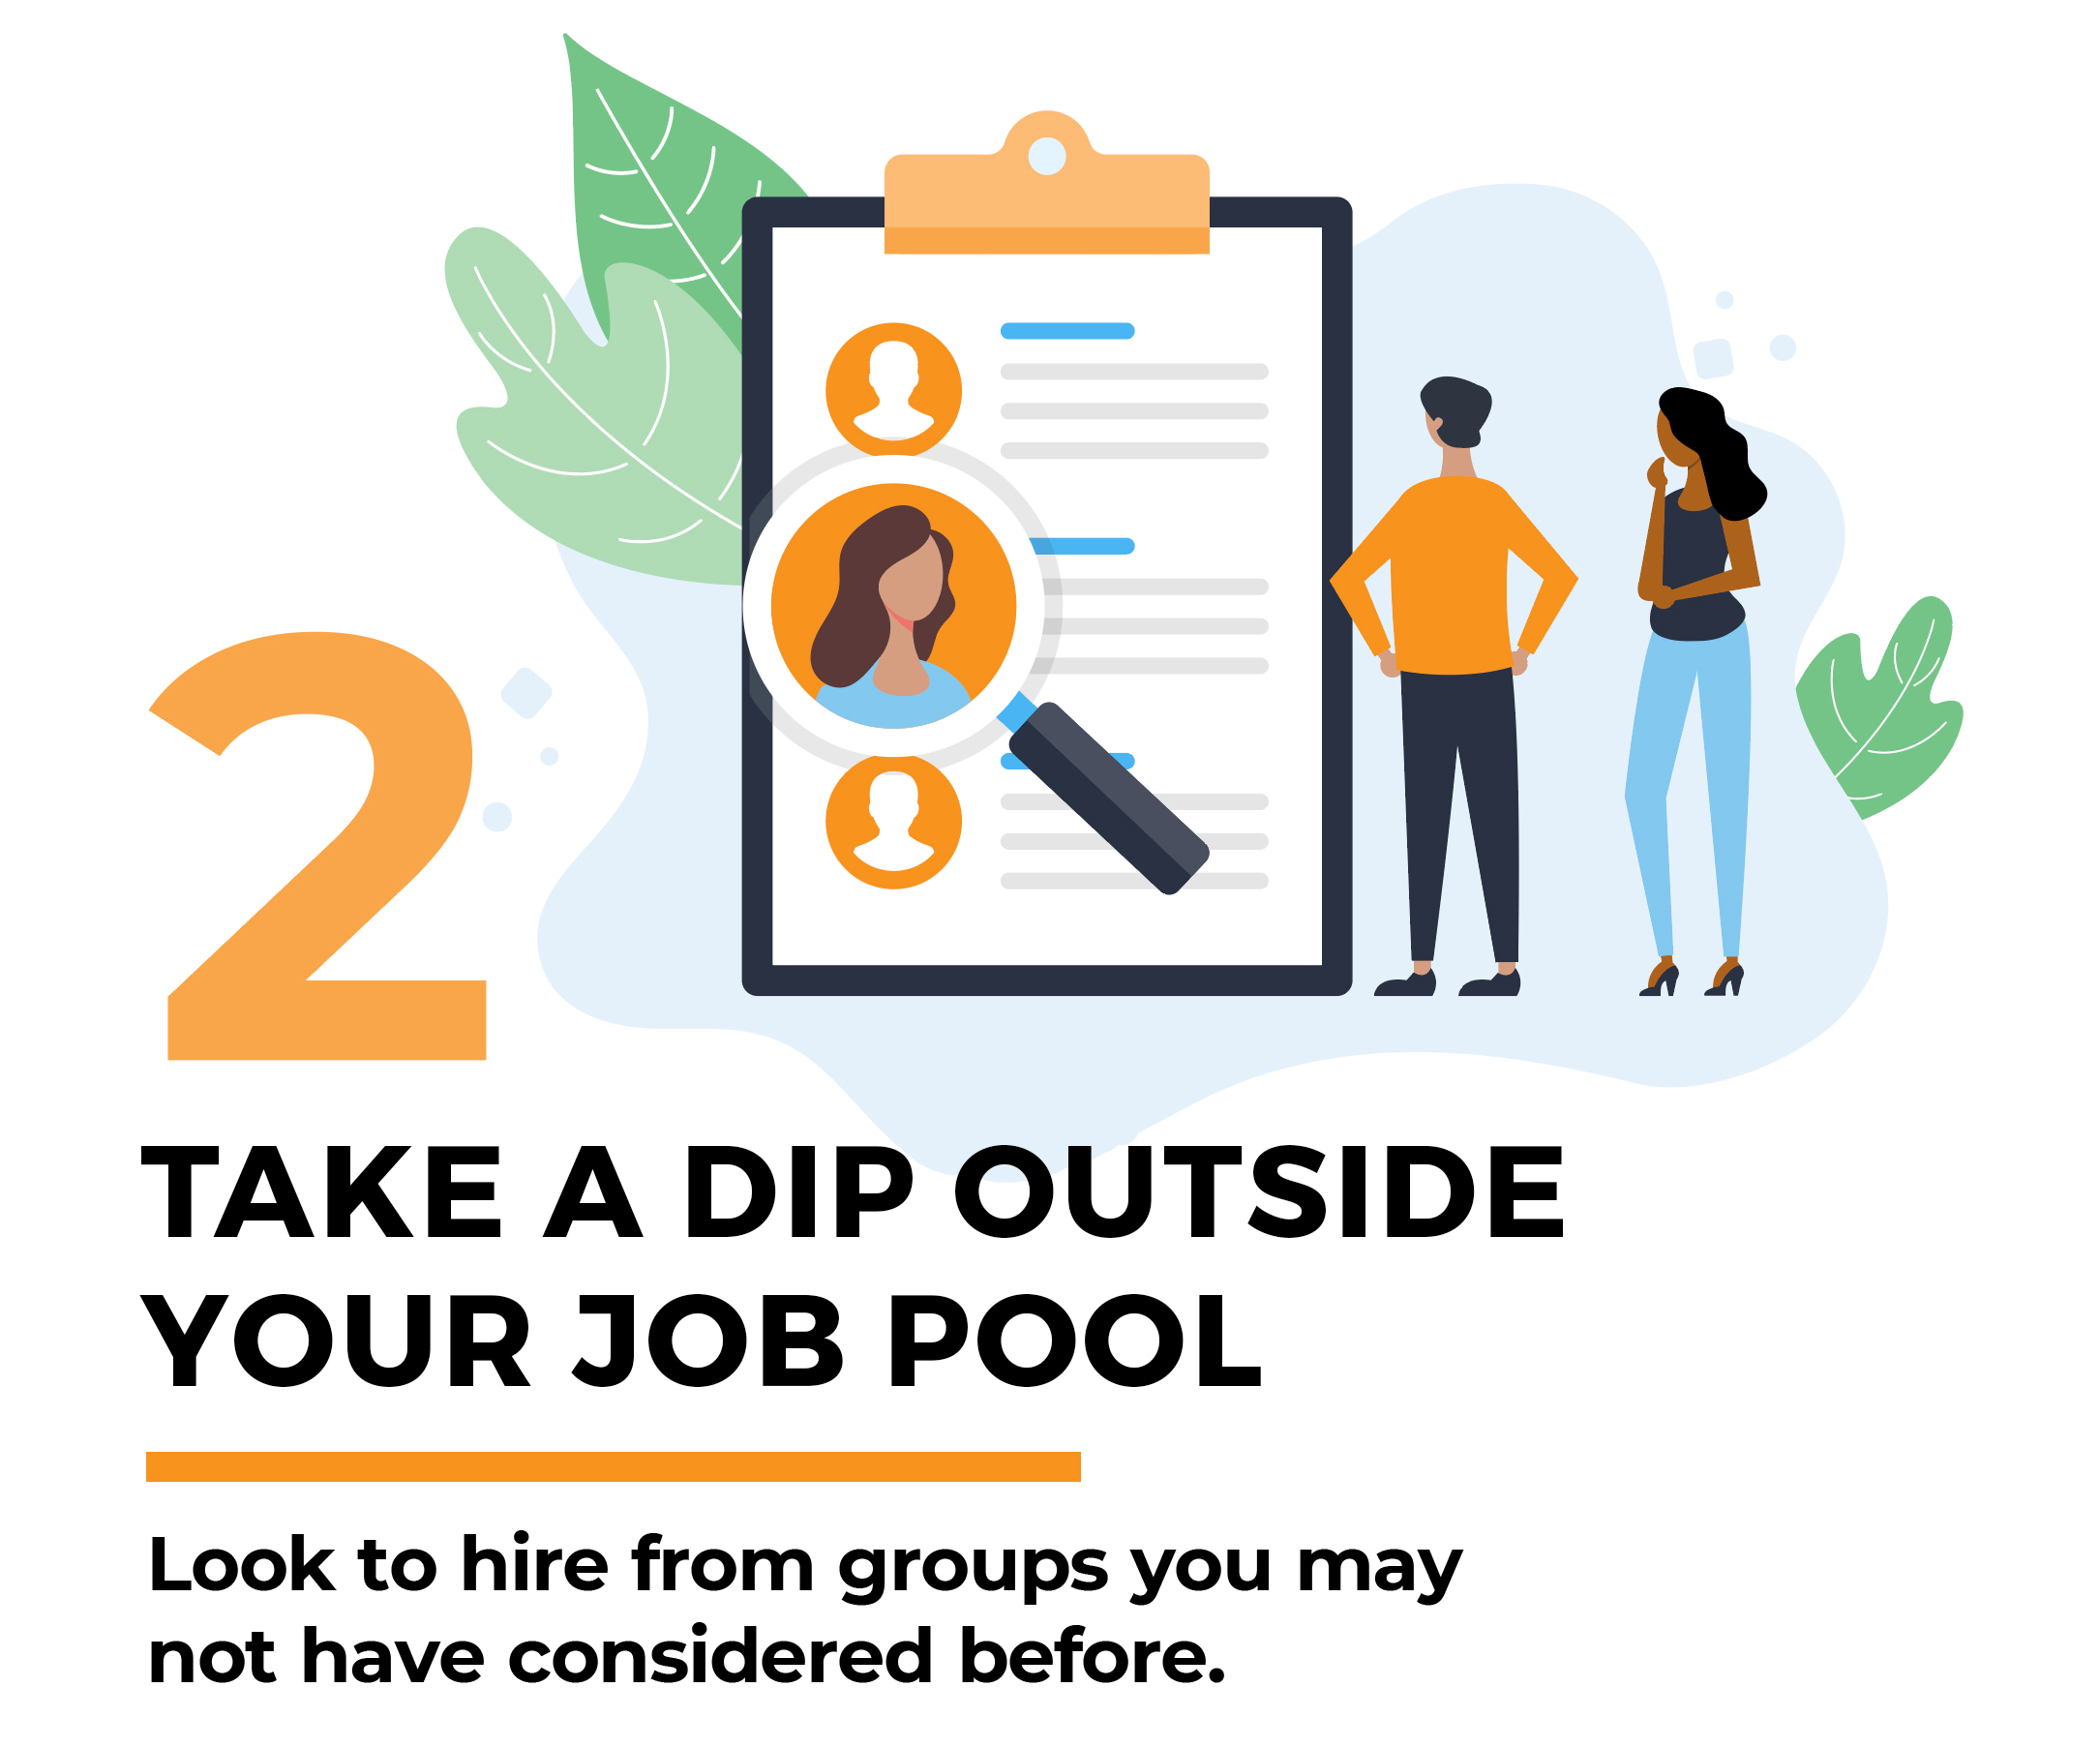 Take a dip outside your job pool